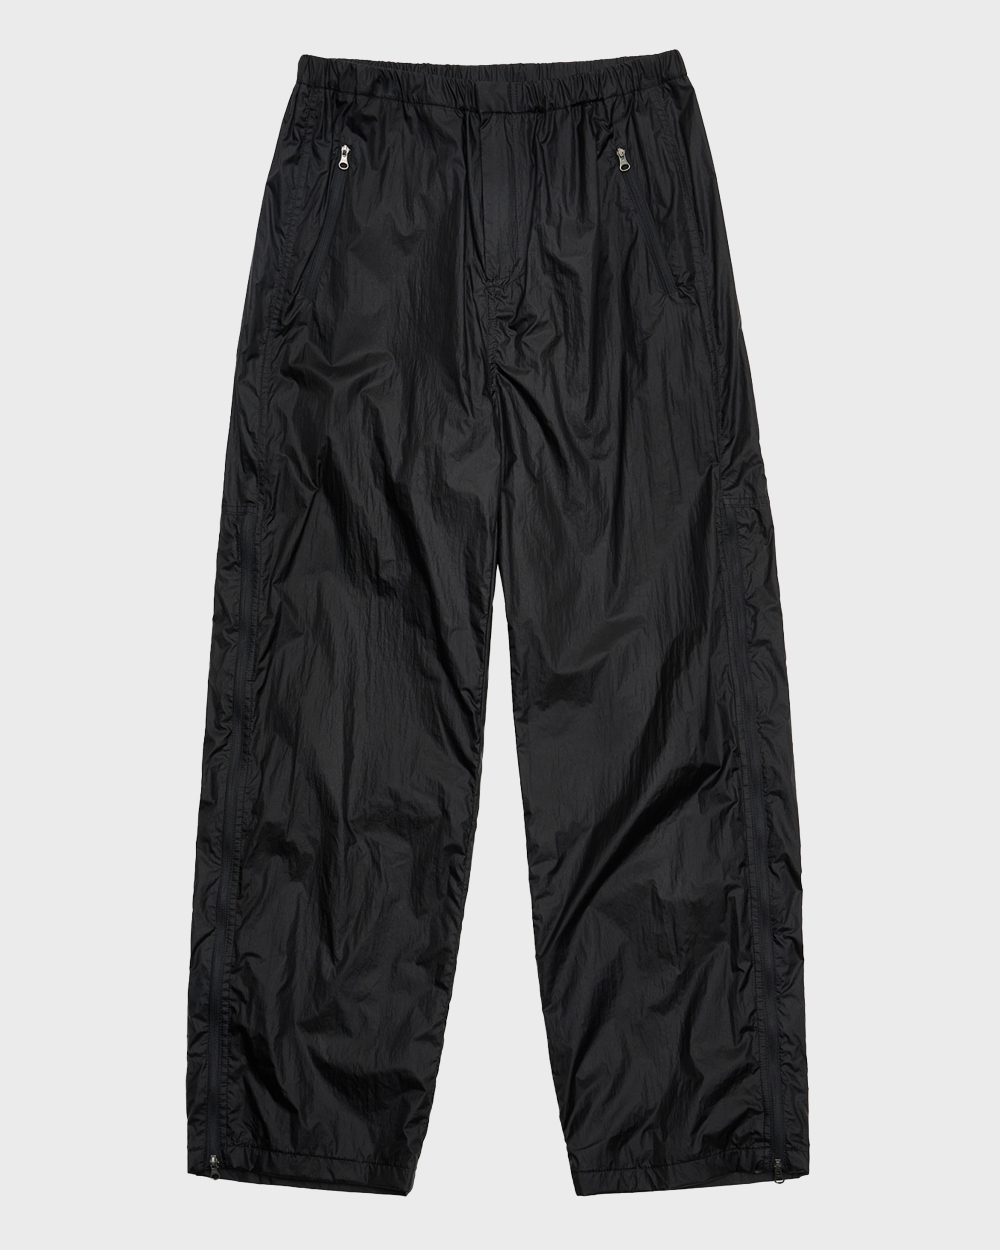 Nylon Banding Pants (Black)